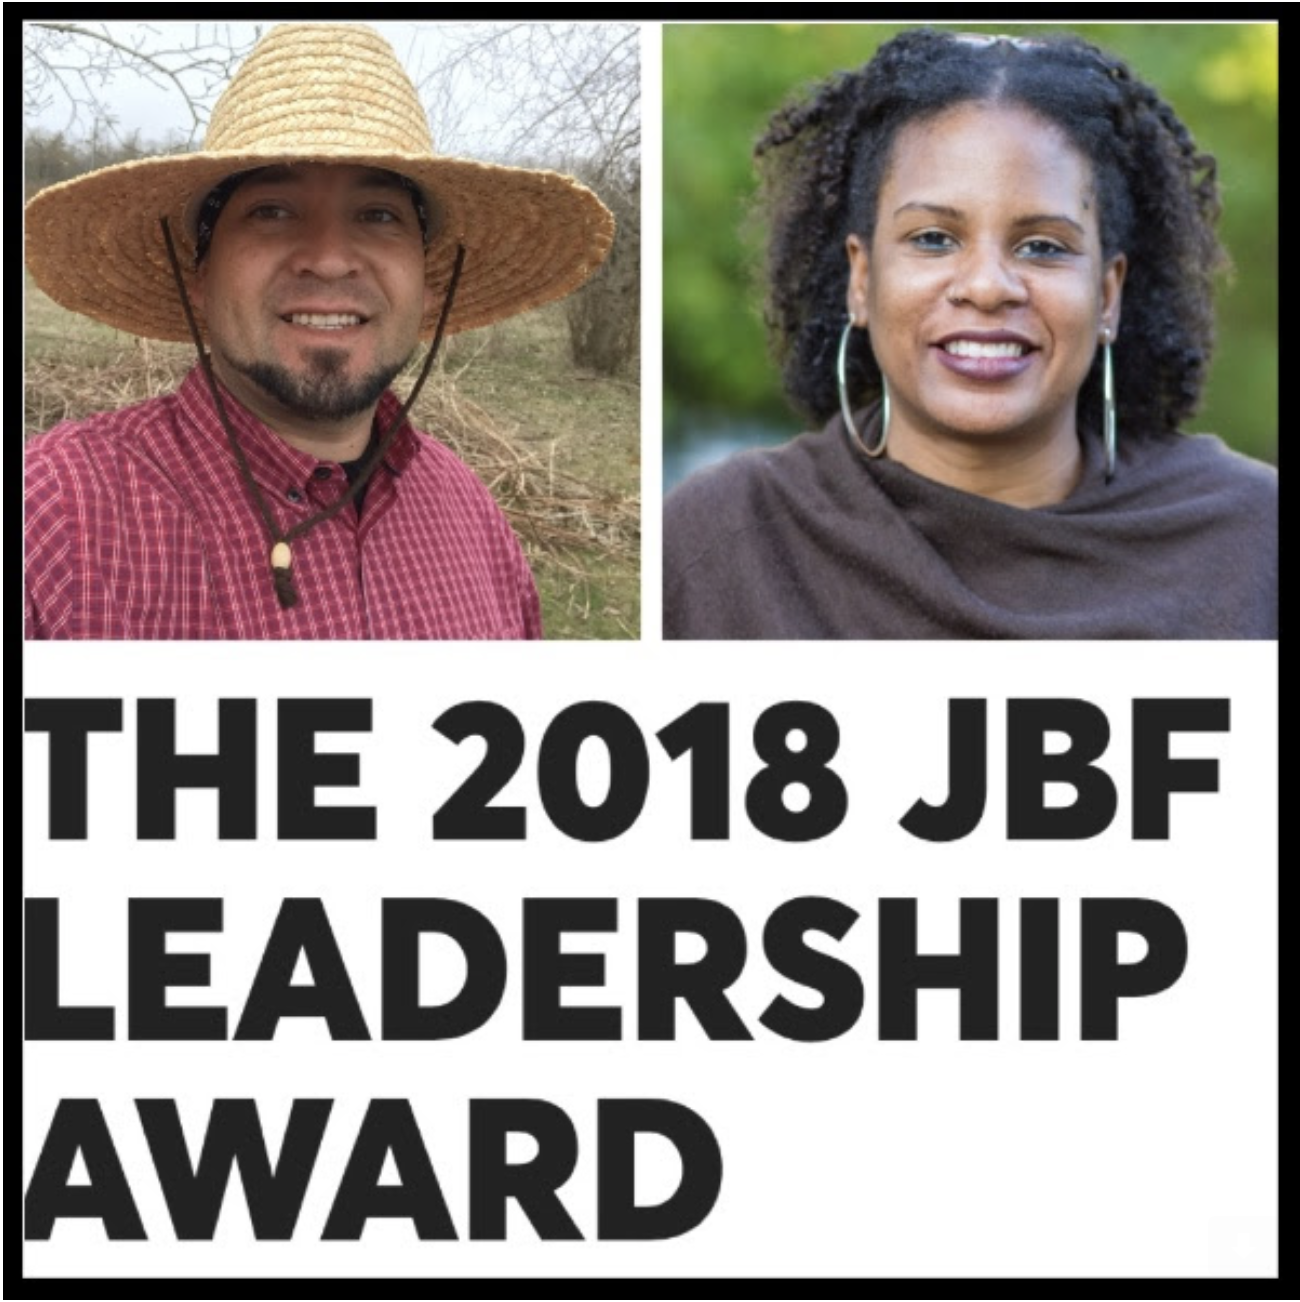 Congratulations to this year’s James Beard Foundation Leadership Award honorees!